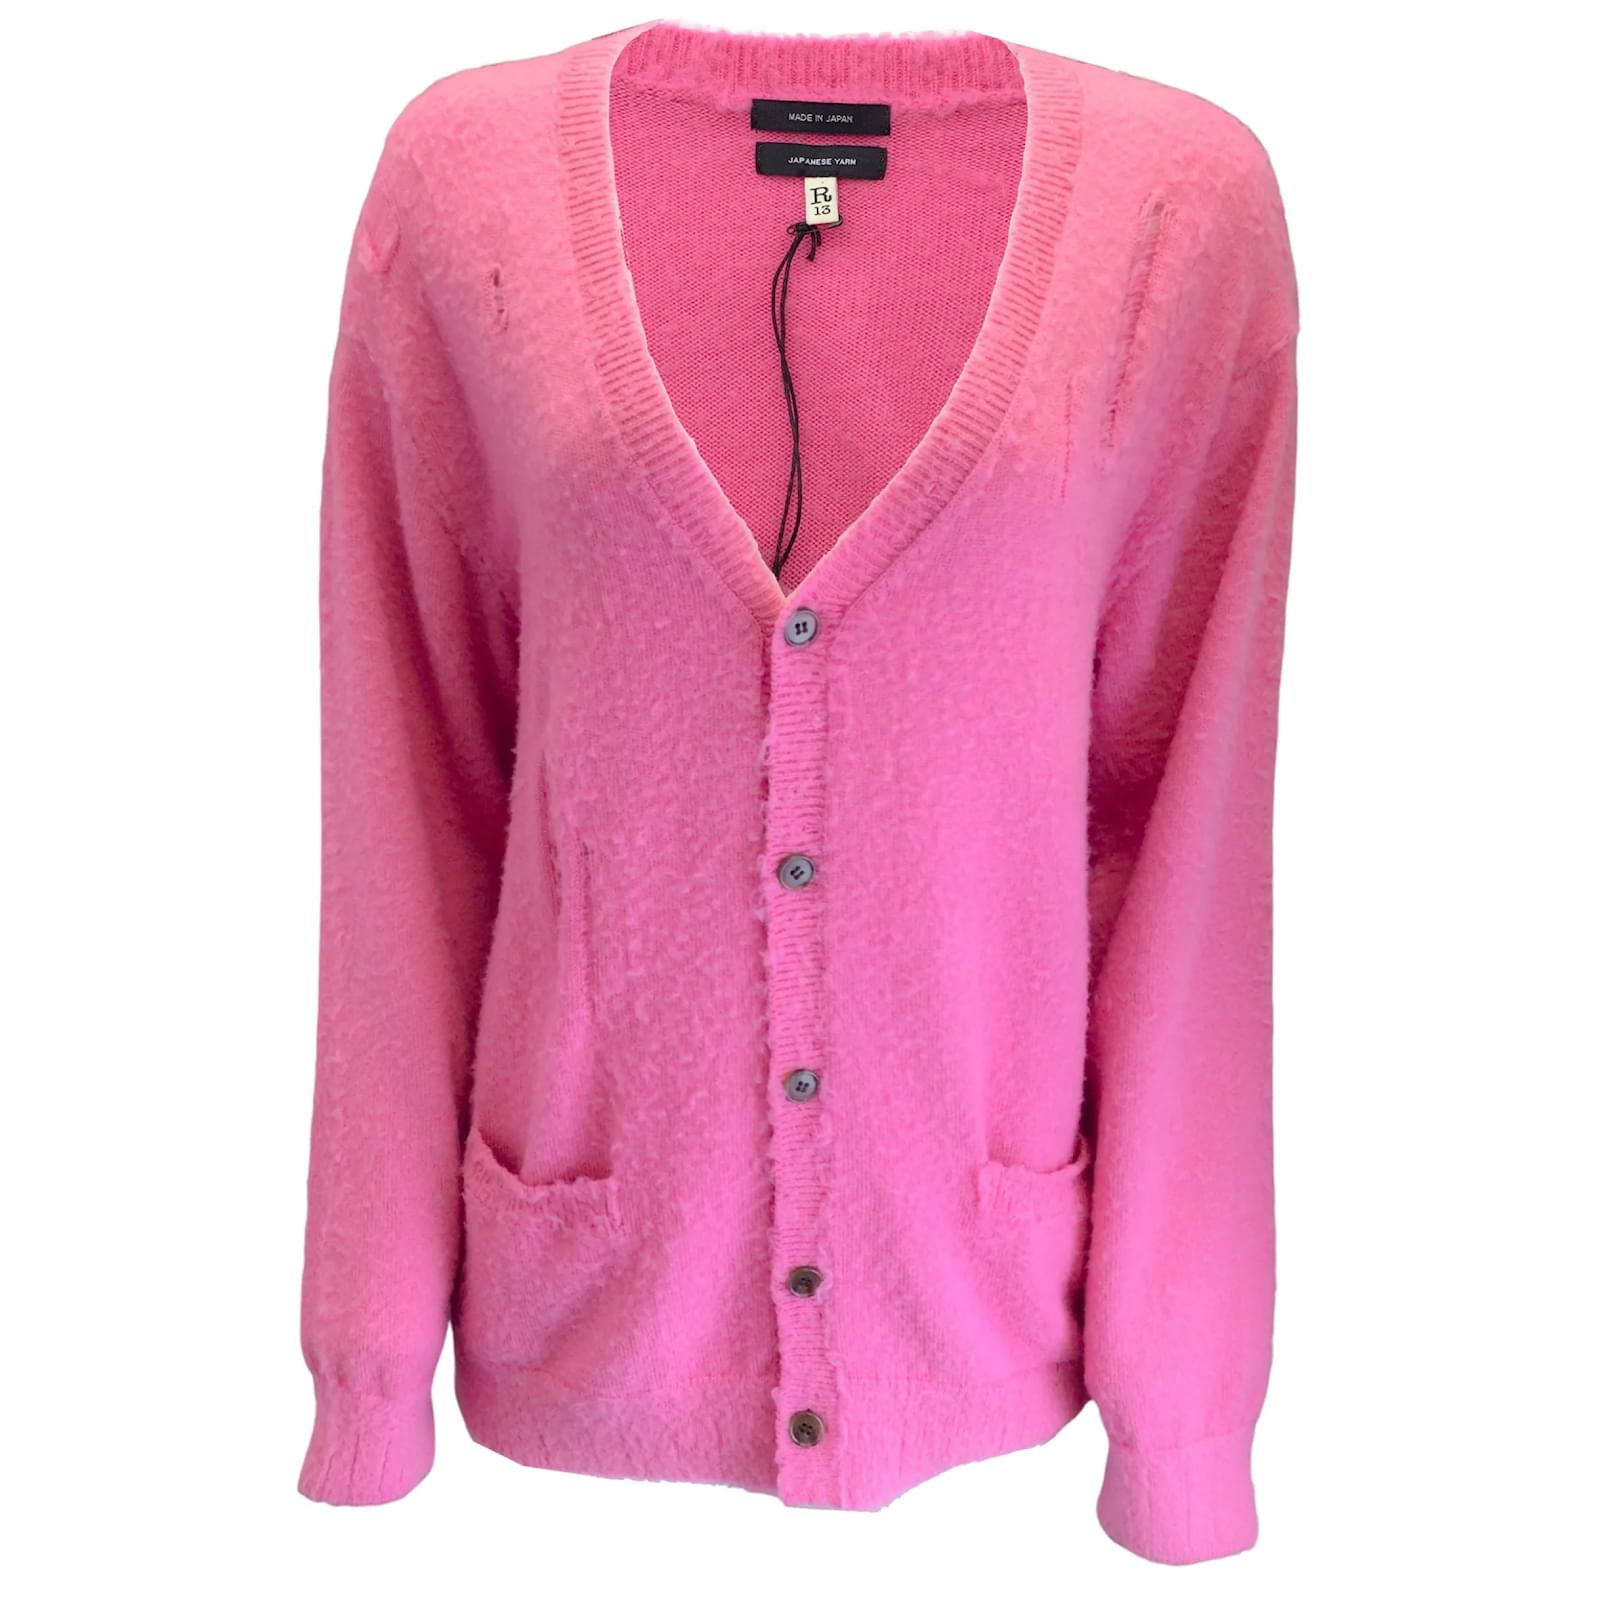 R13 Pink Shaggy Oversized Distressed Edge Cardigan Sweater Wool